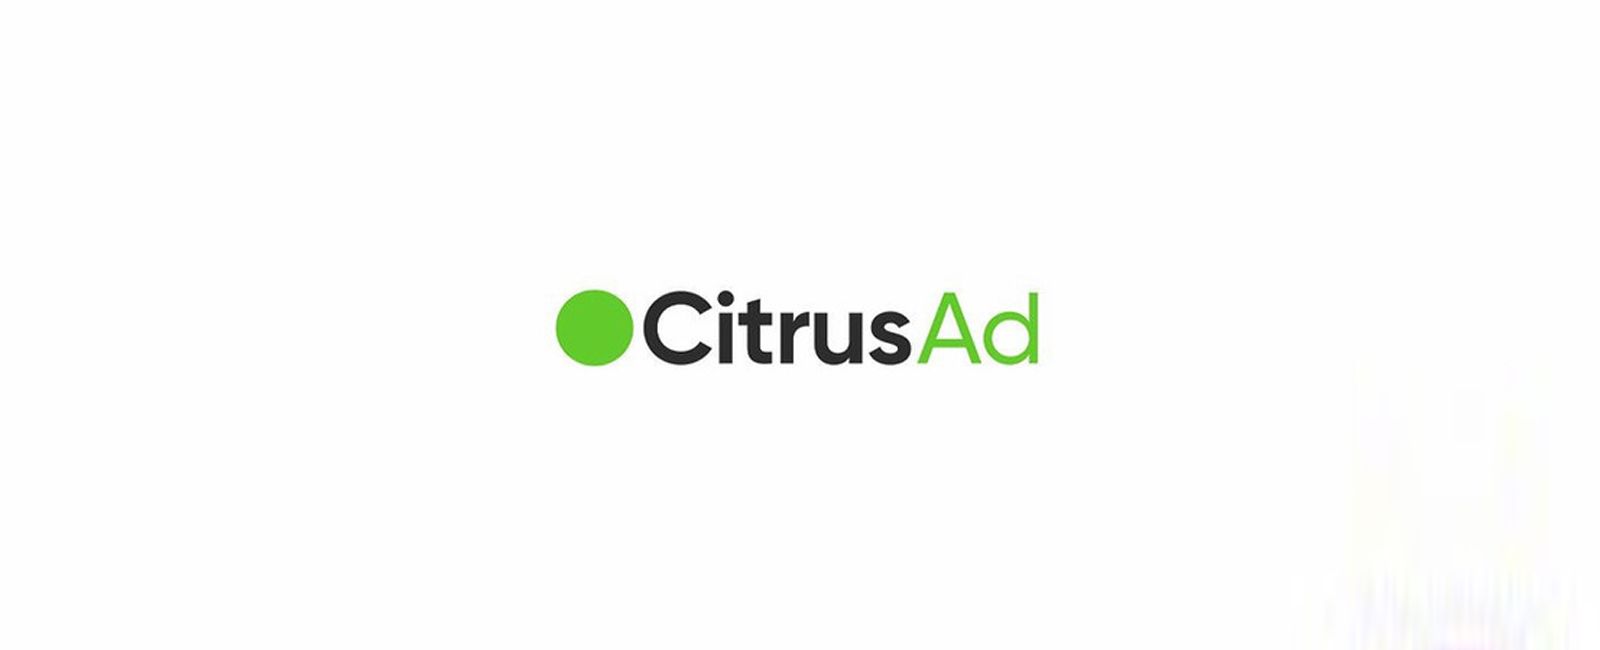 CitrusAd_logo_Publicis purchase_cabecera